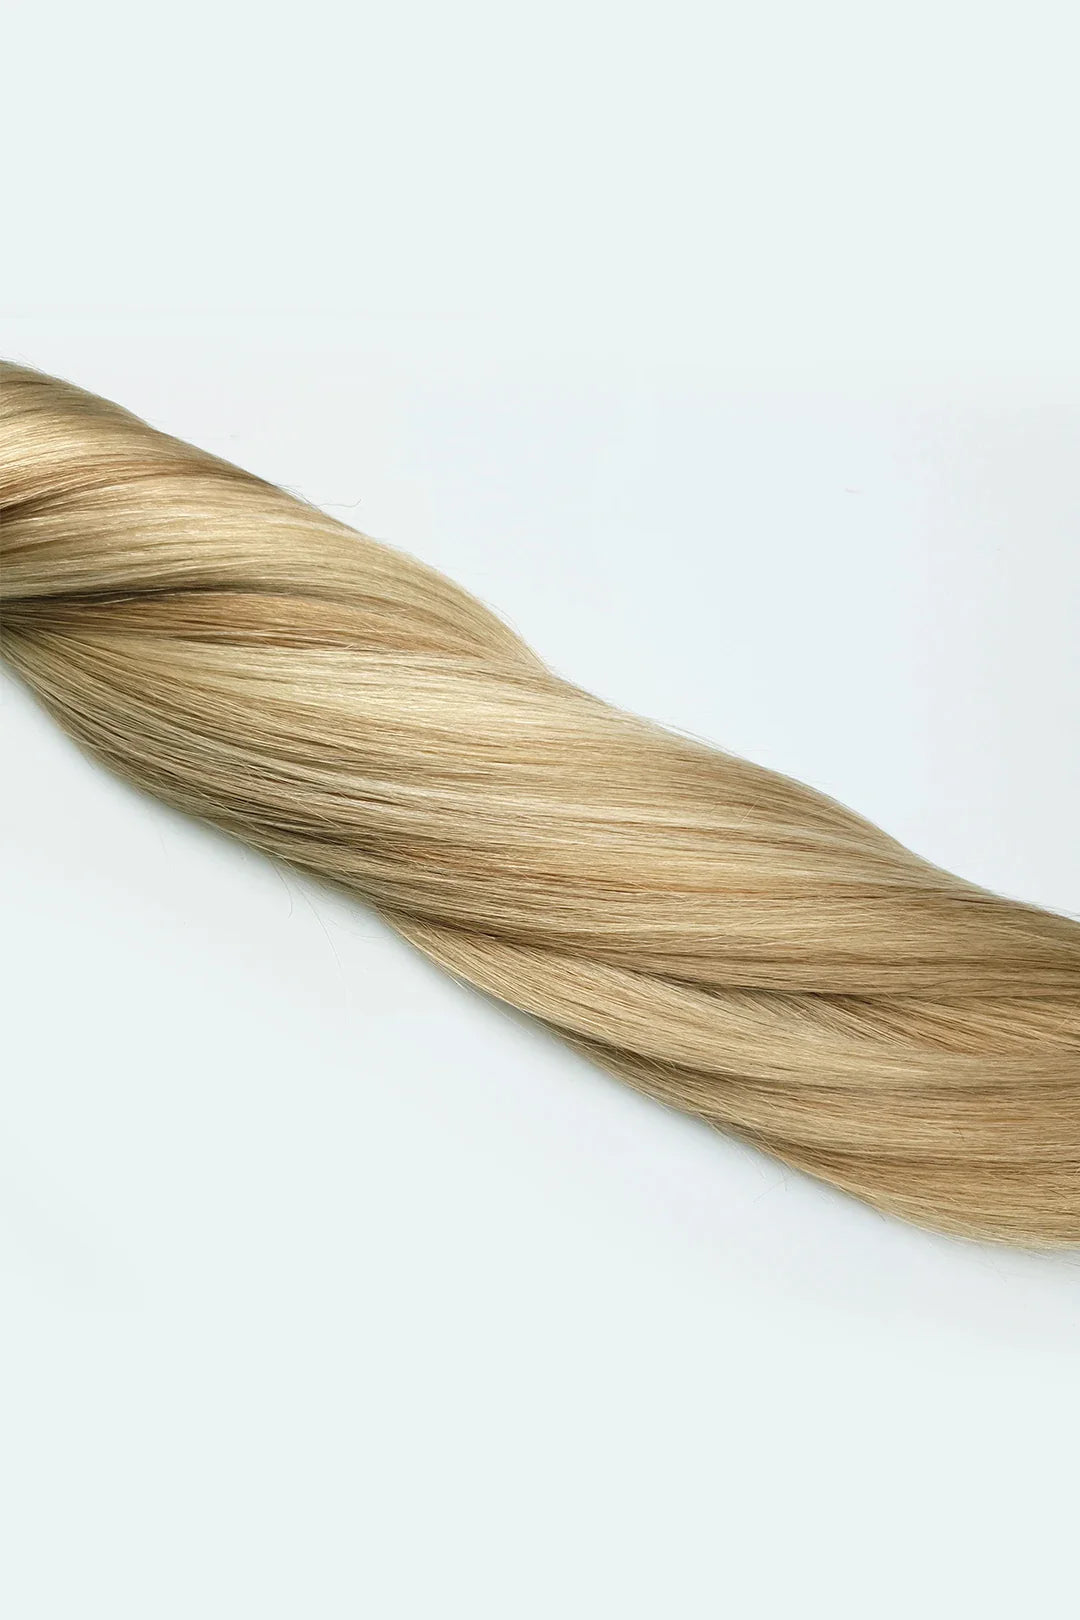 Licht blonde highlights clip-in hairextensions ☀️ 40cm - 260g